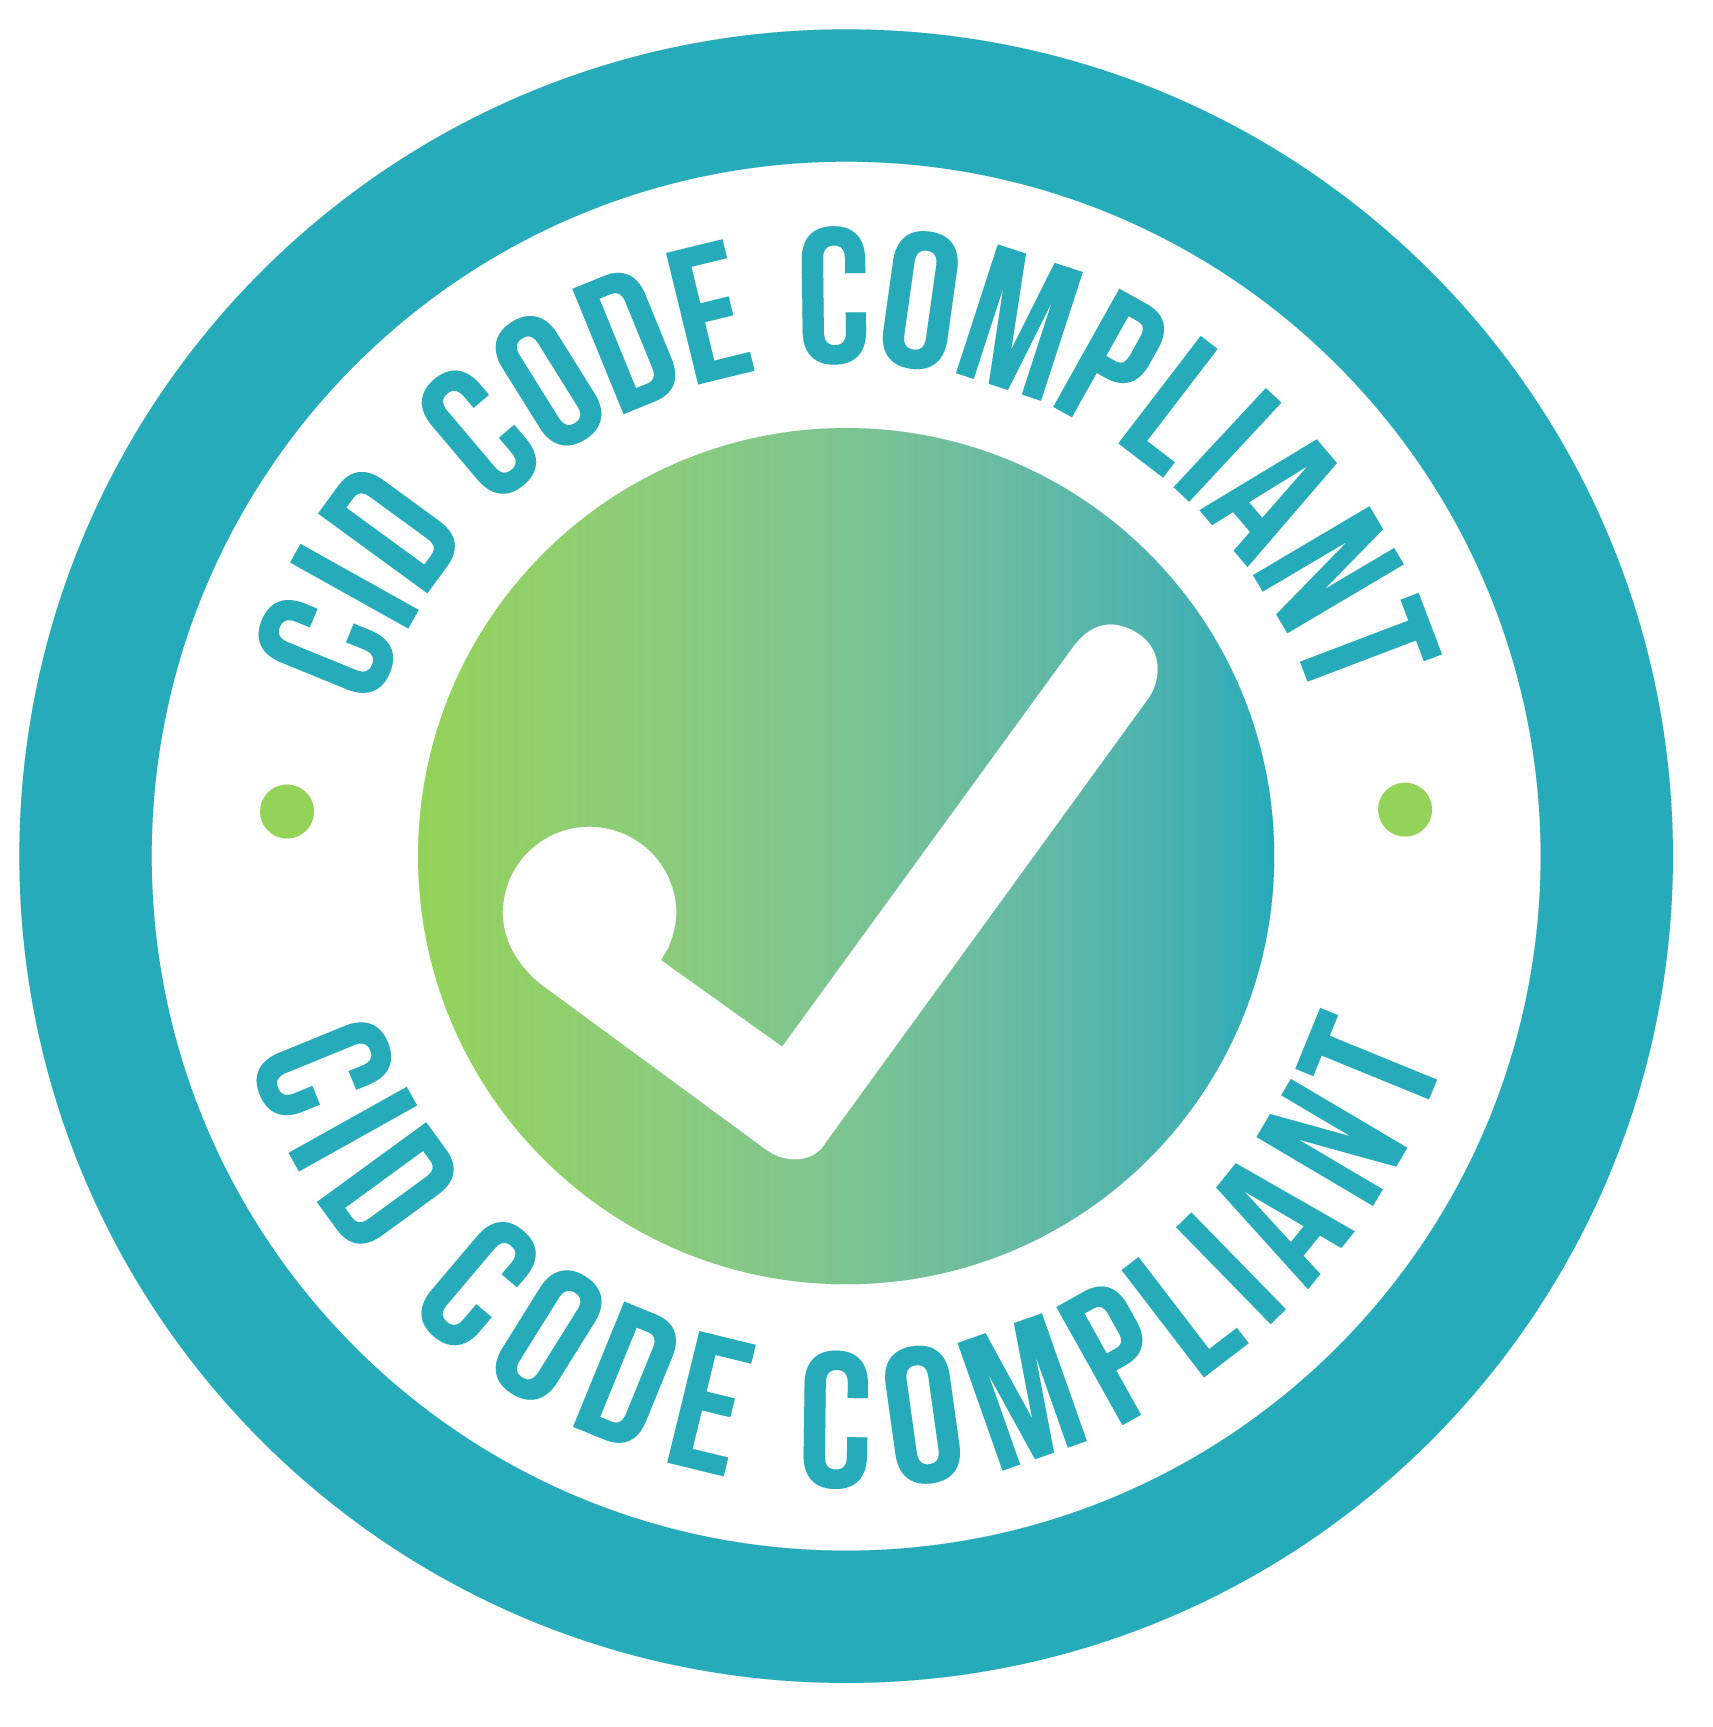 CID Code Compliant